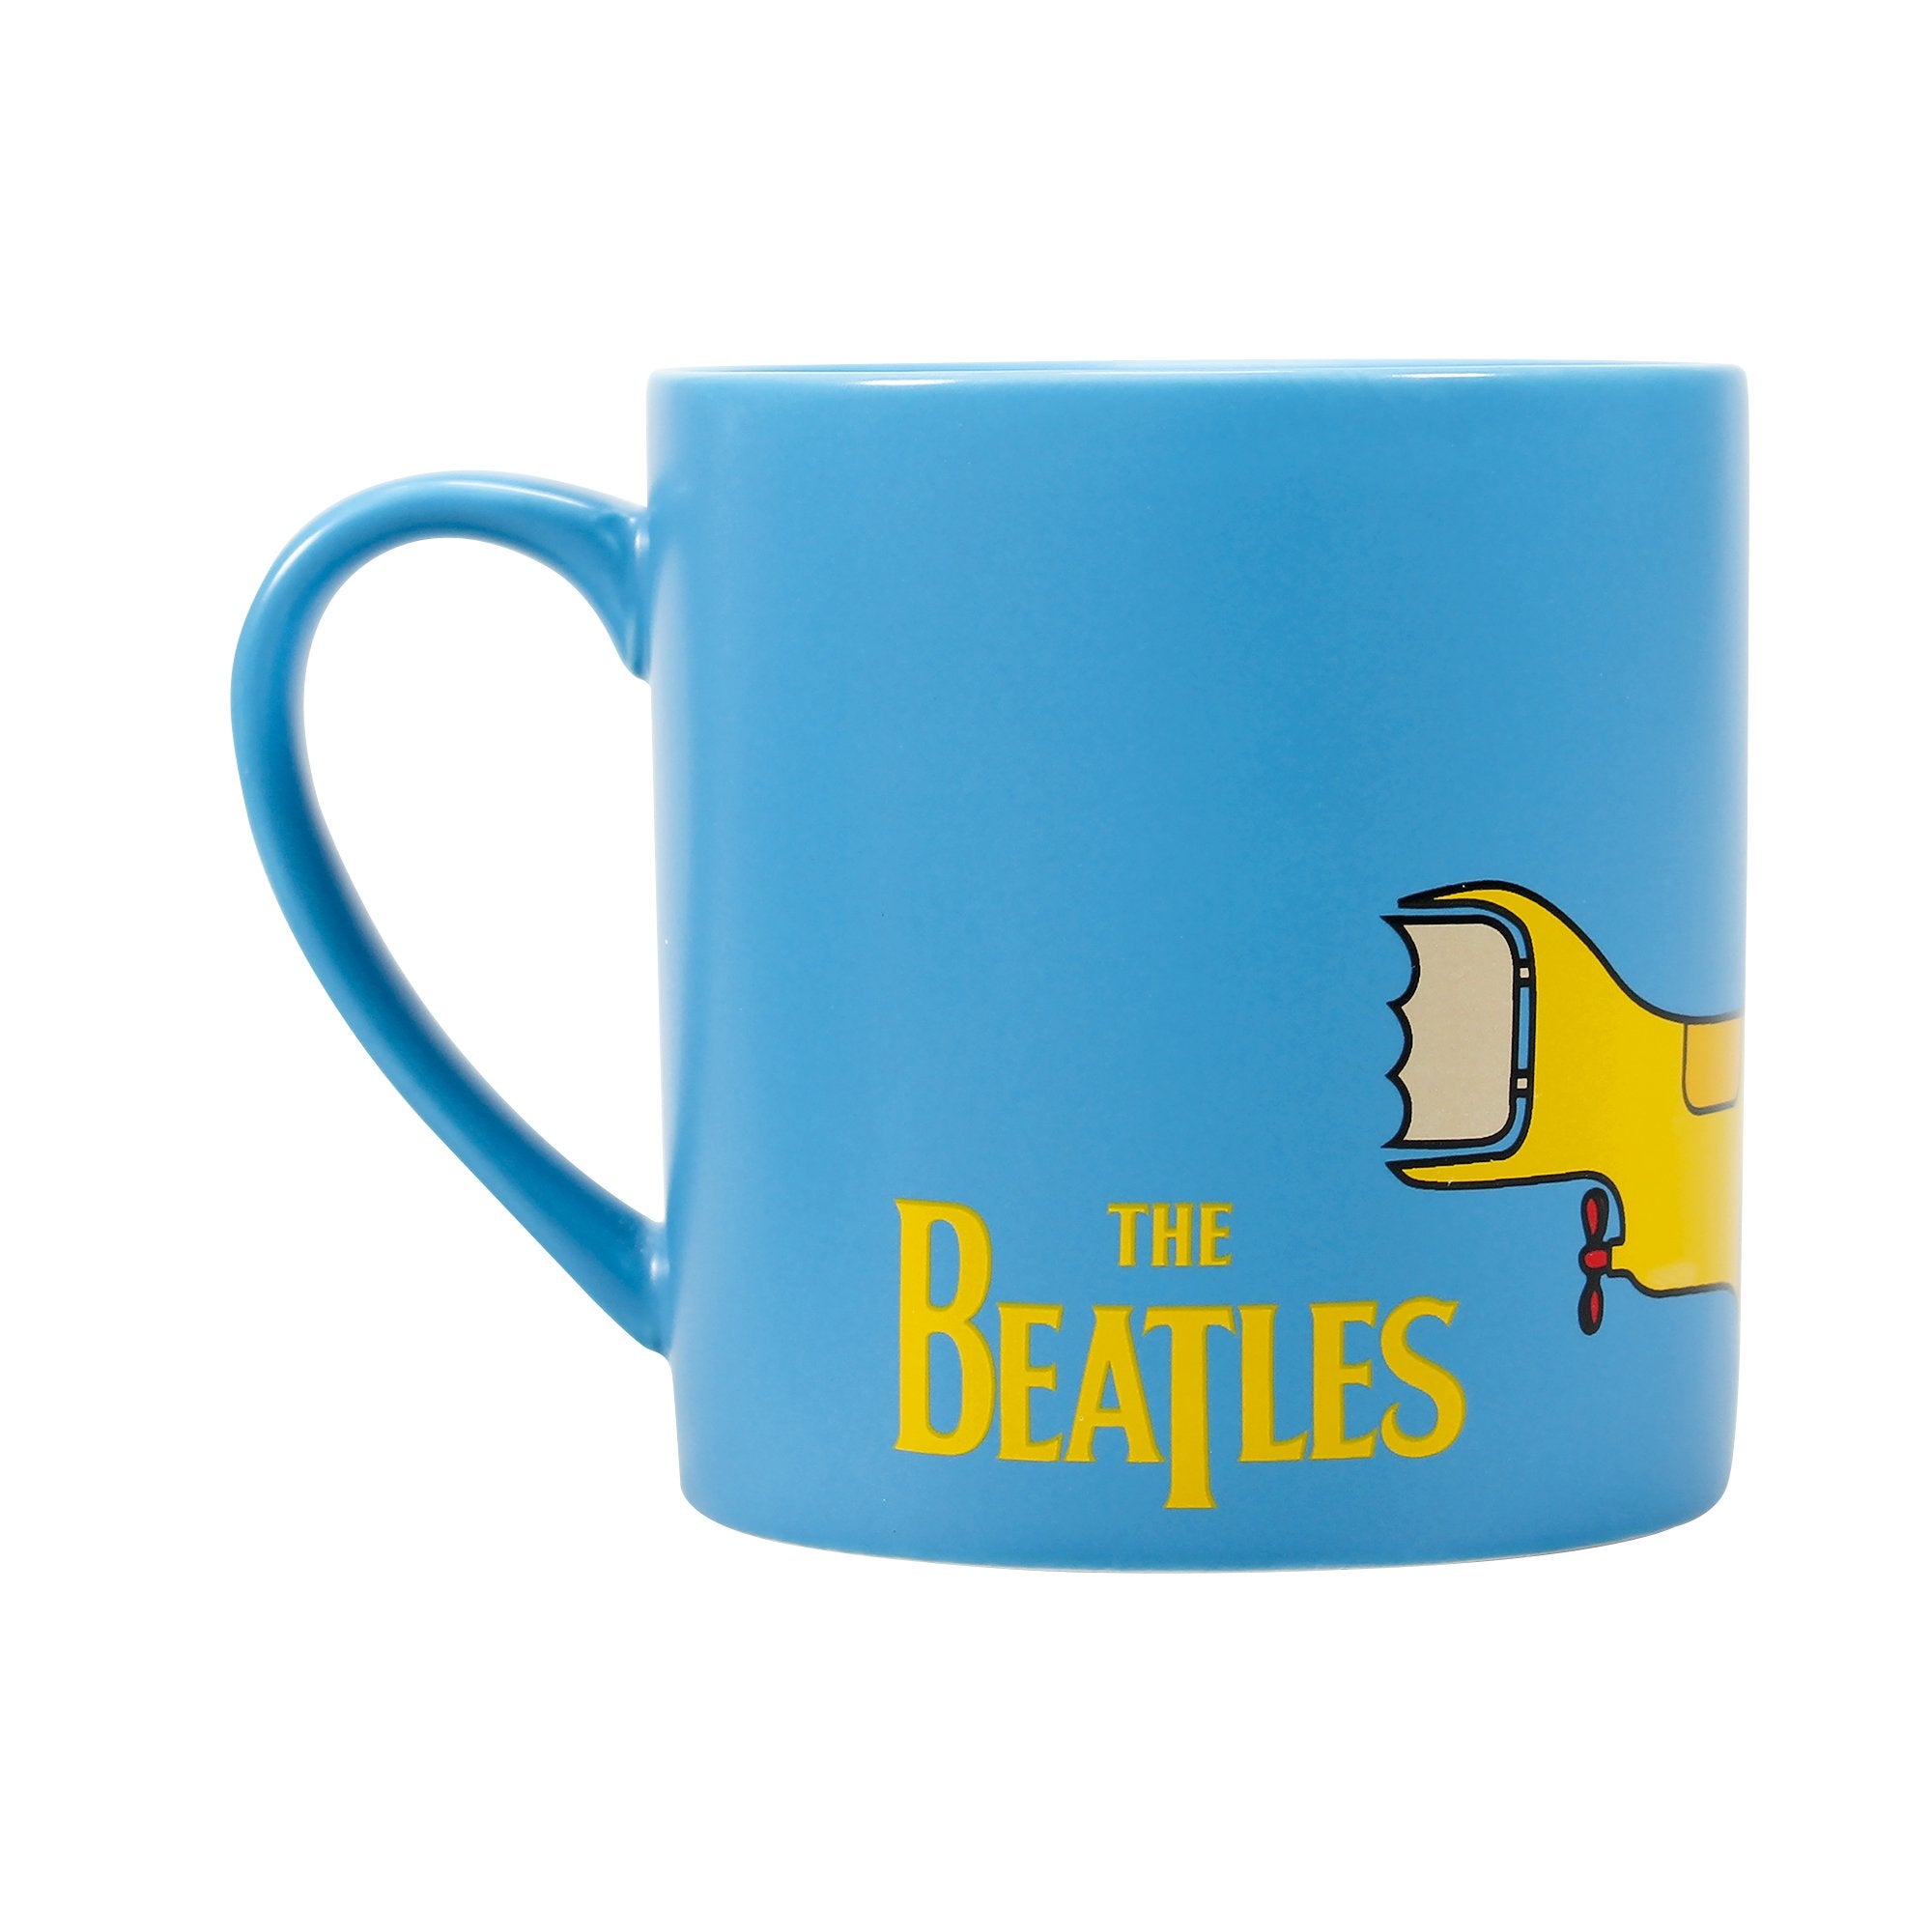 Mug Classic Boxed (310ml) - The Beatles (Yellow Submarine)